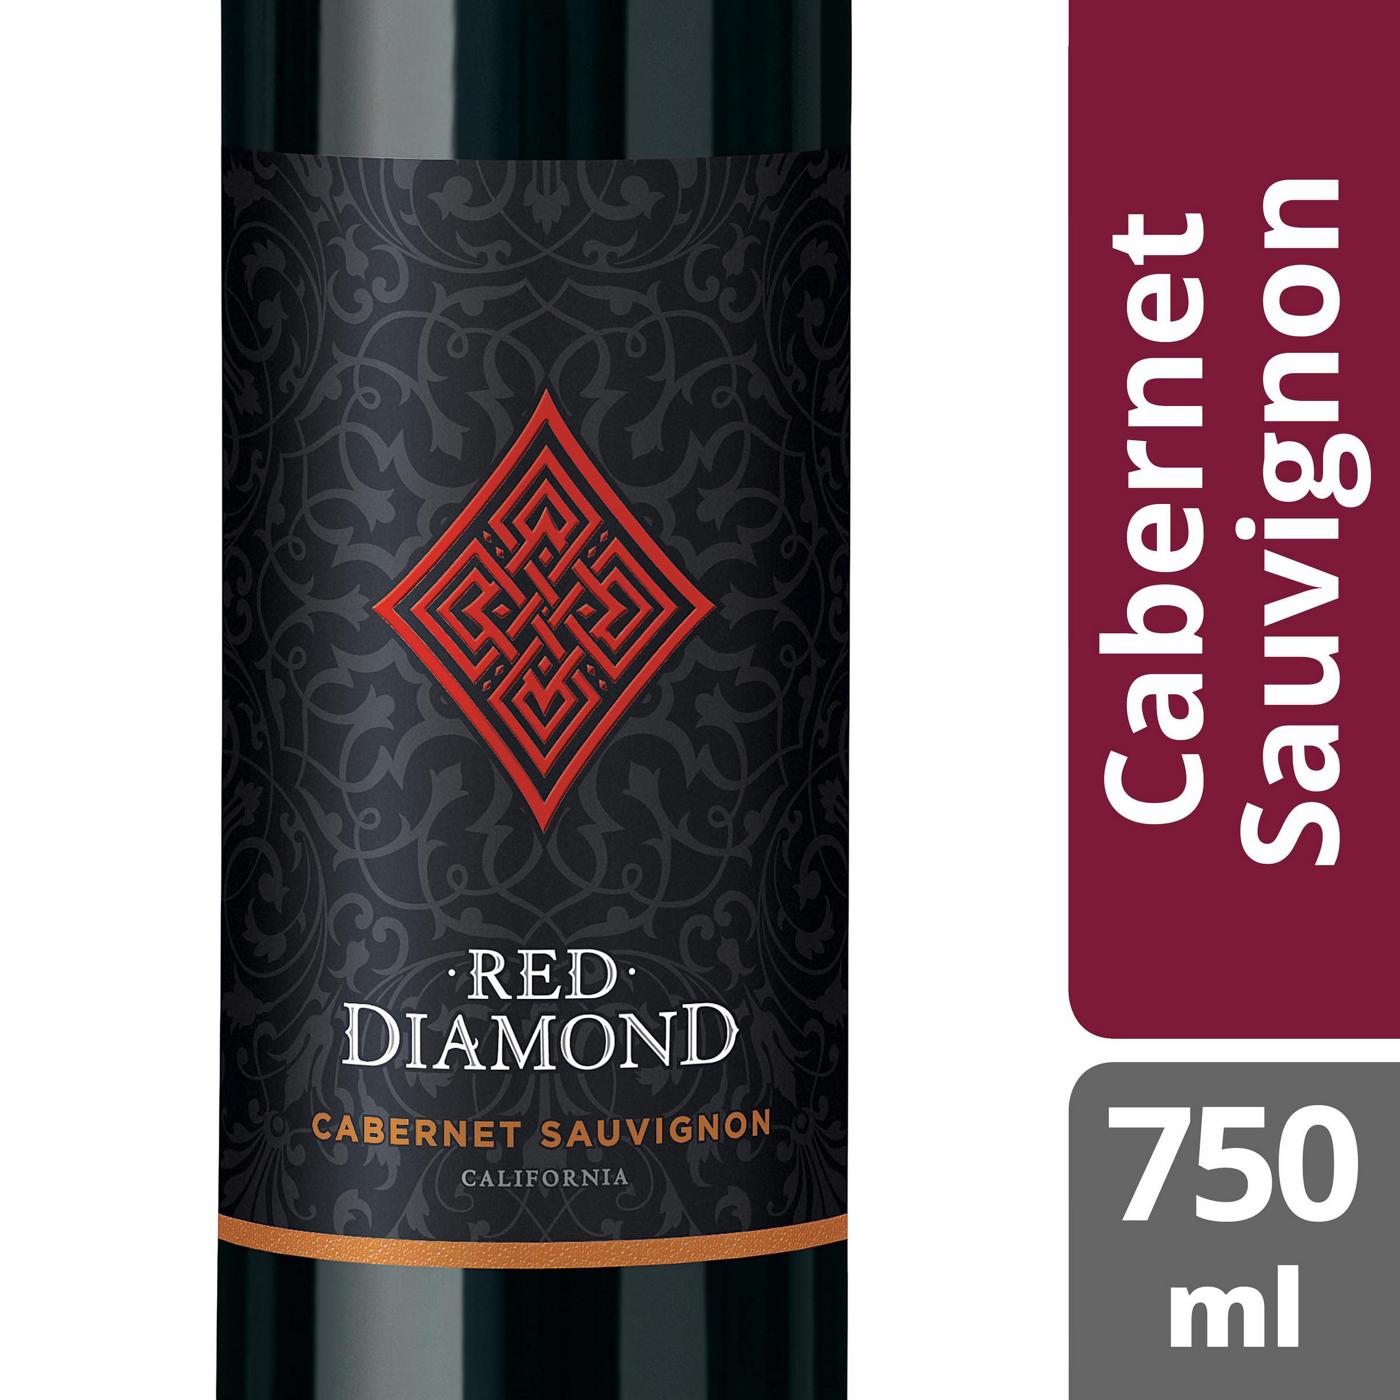 Red Diamond Cabernet Sauvignon; image 3 of 5